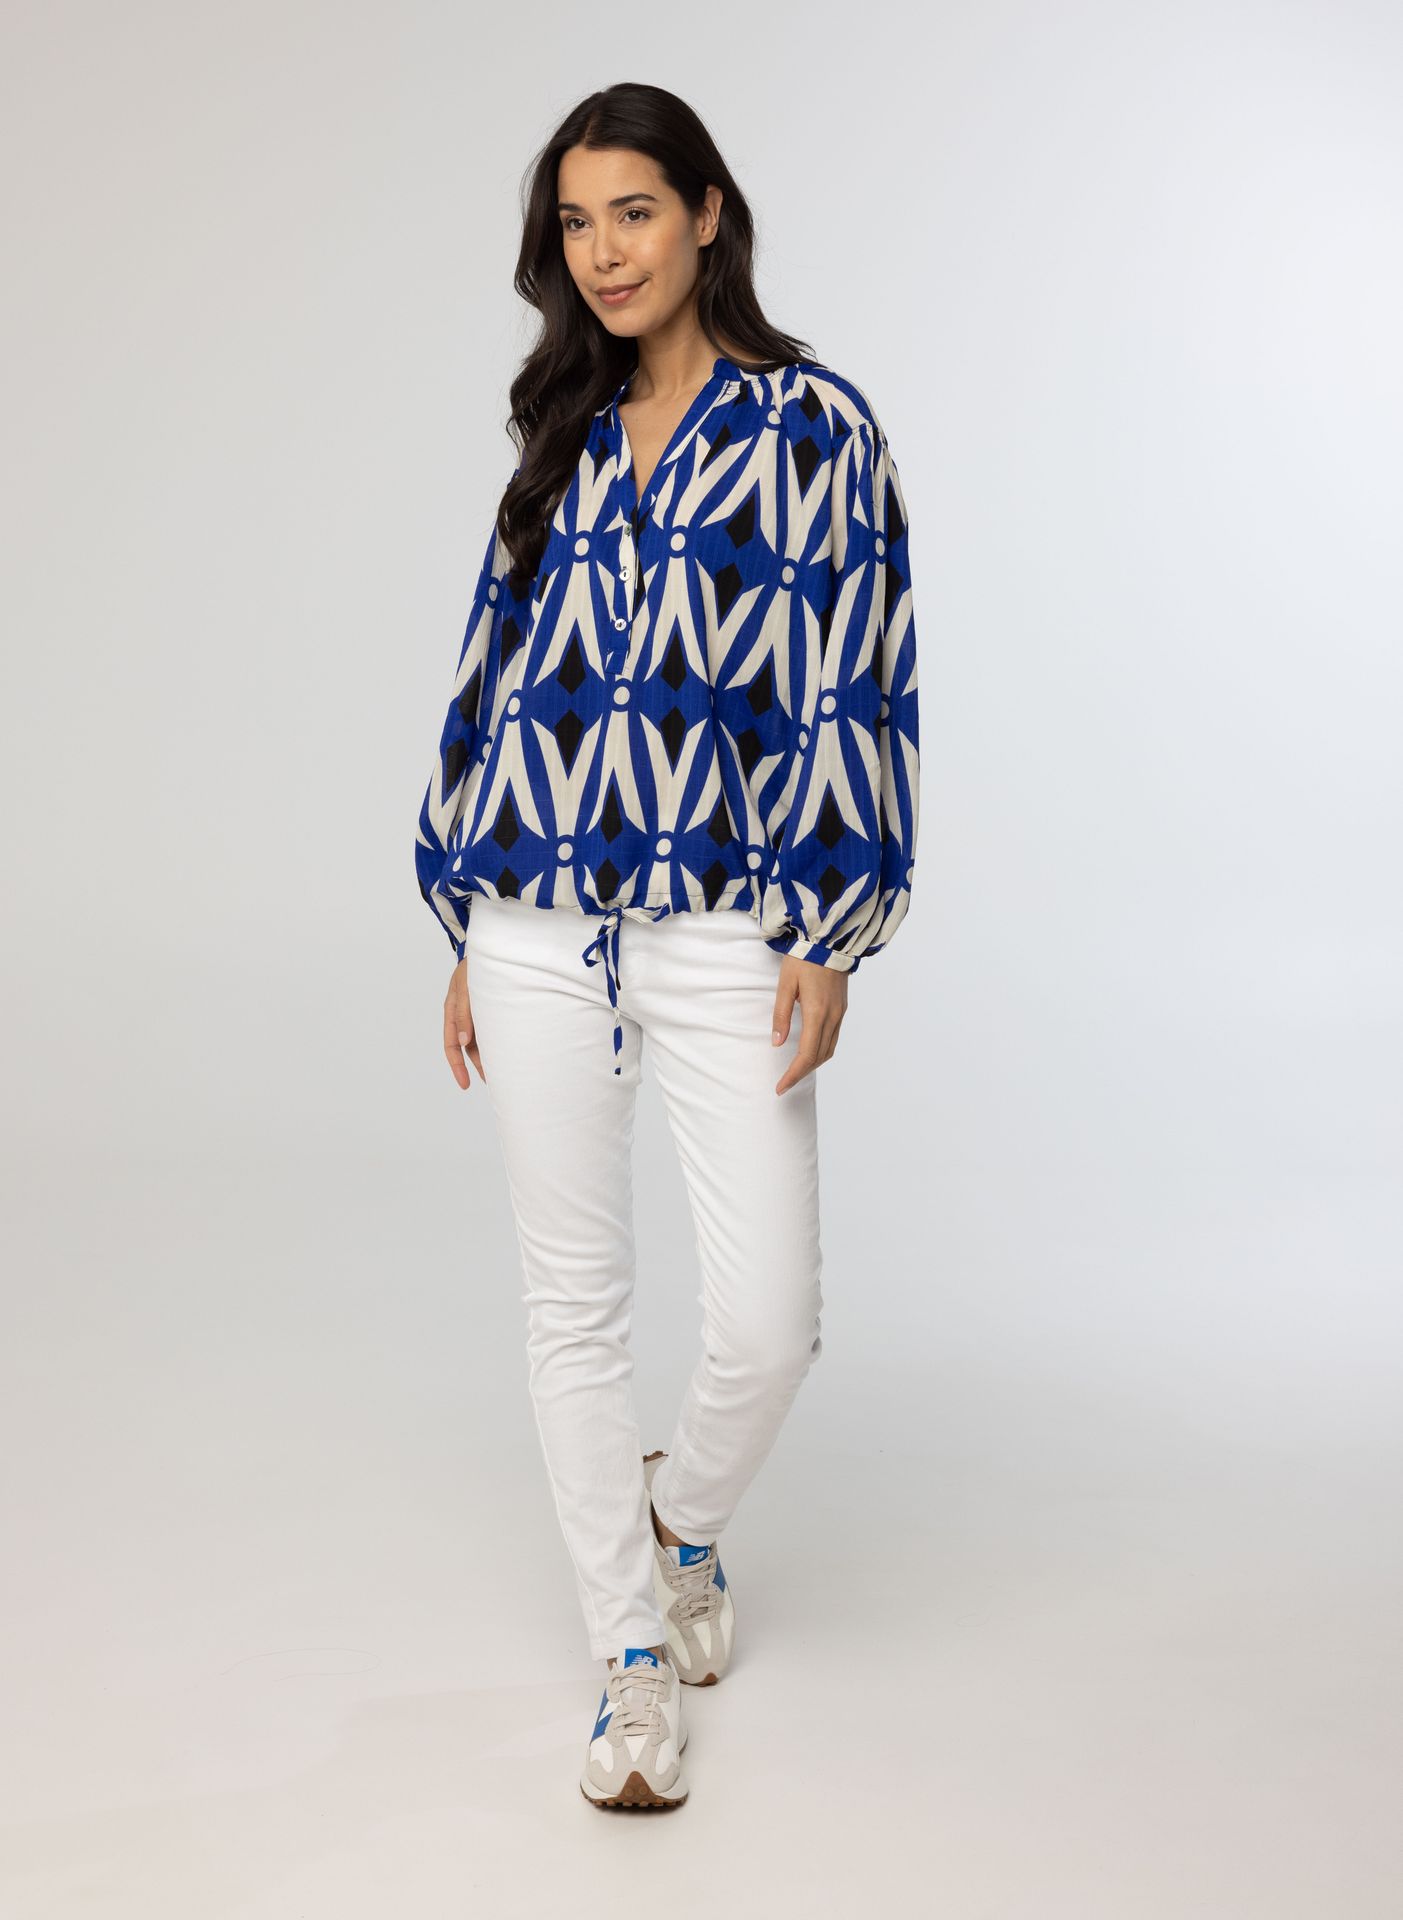 Norah Kobaltblauwe blouse met pofmouwen blue multicolor 214180-420